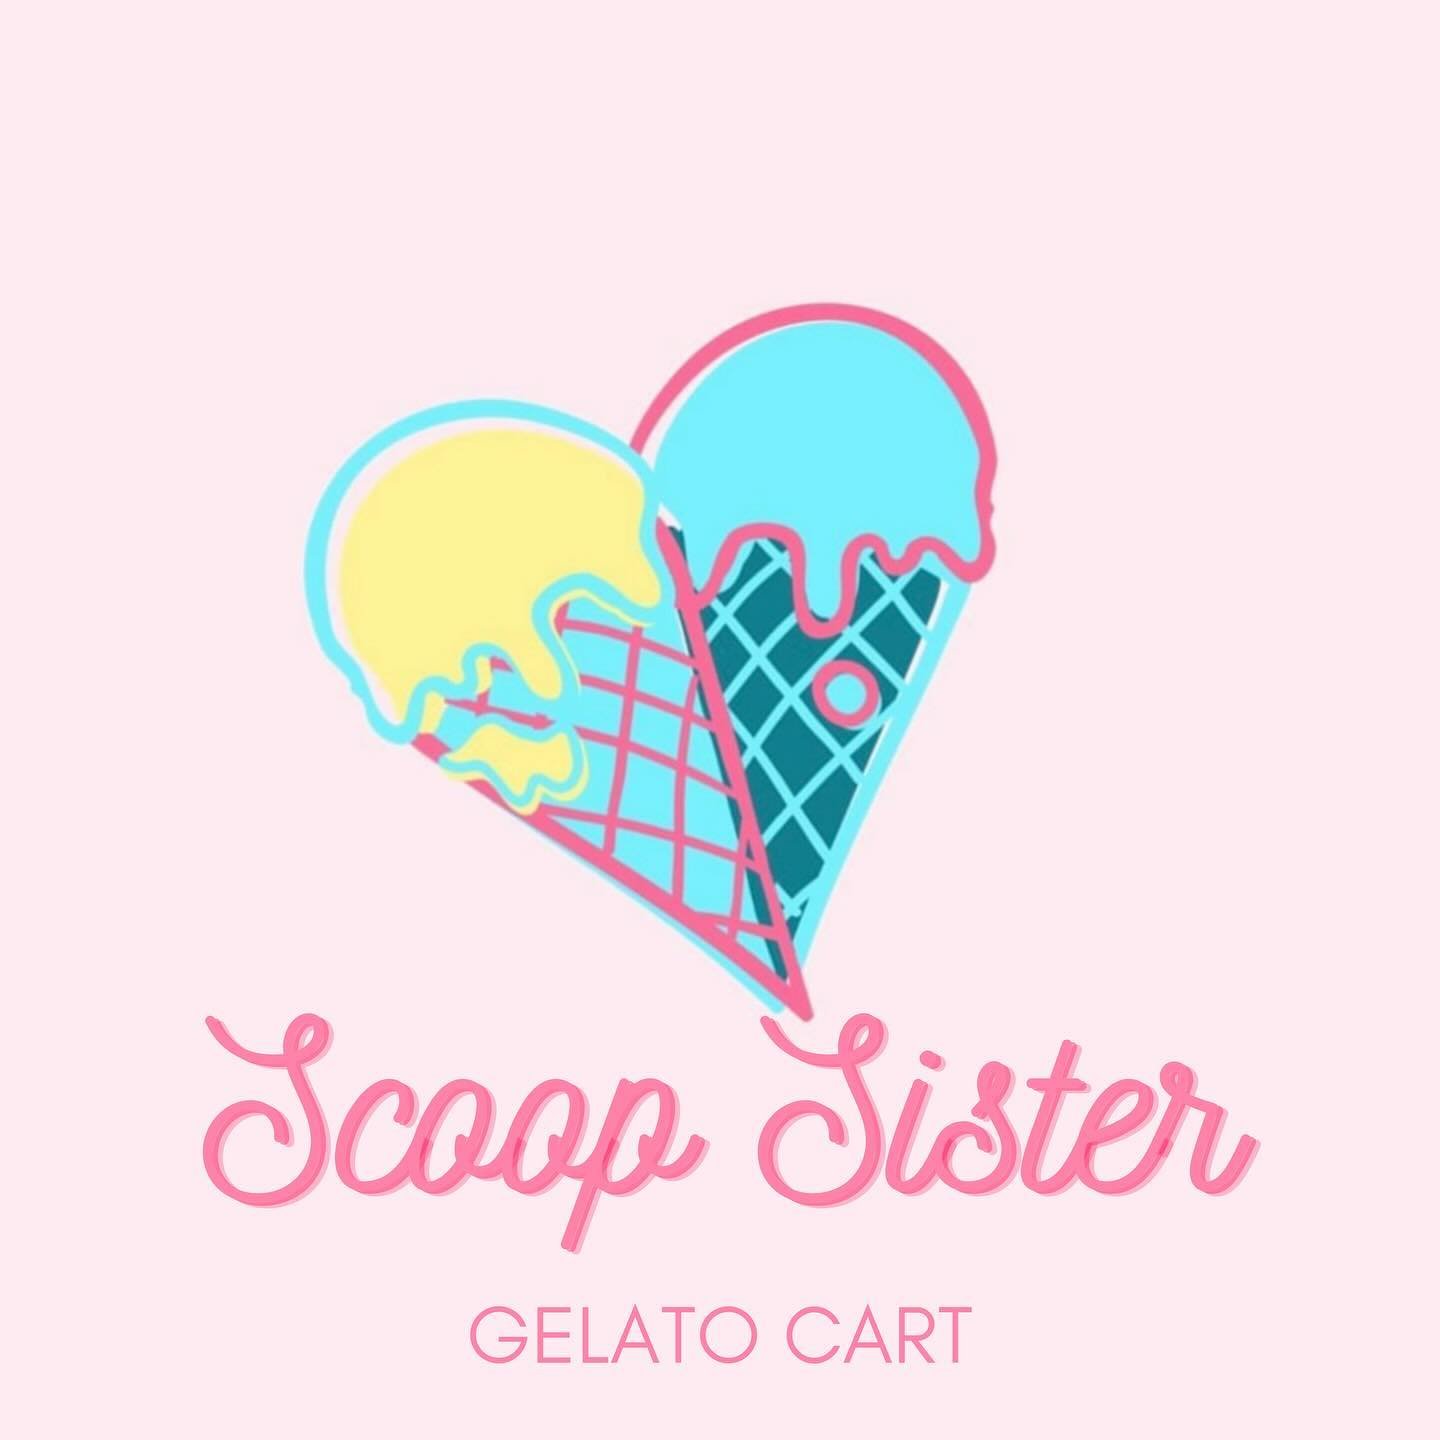 Fancy something sweet? Scoop Sister has you sorted on race day serving up award winning gelato🍦 

@scoop.sister